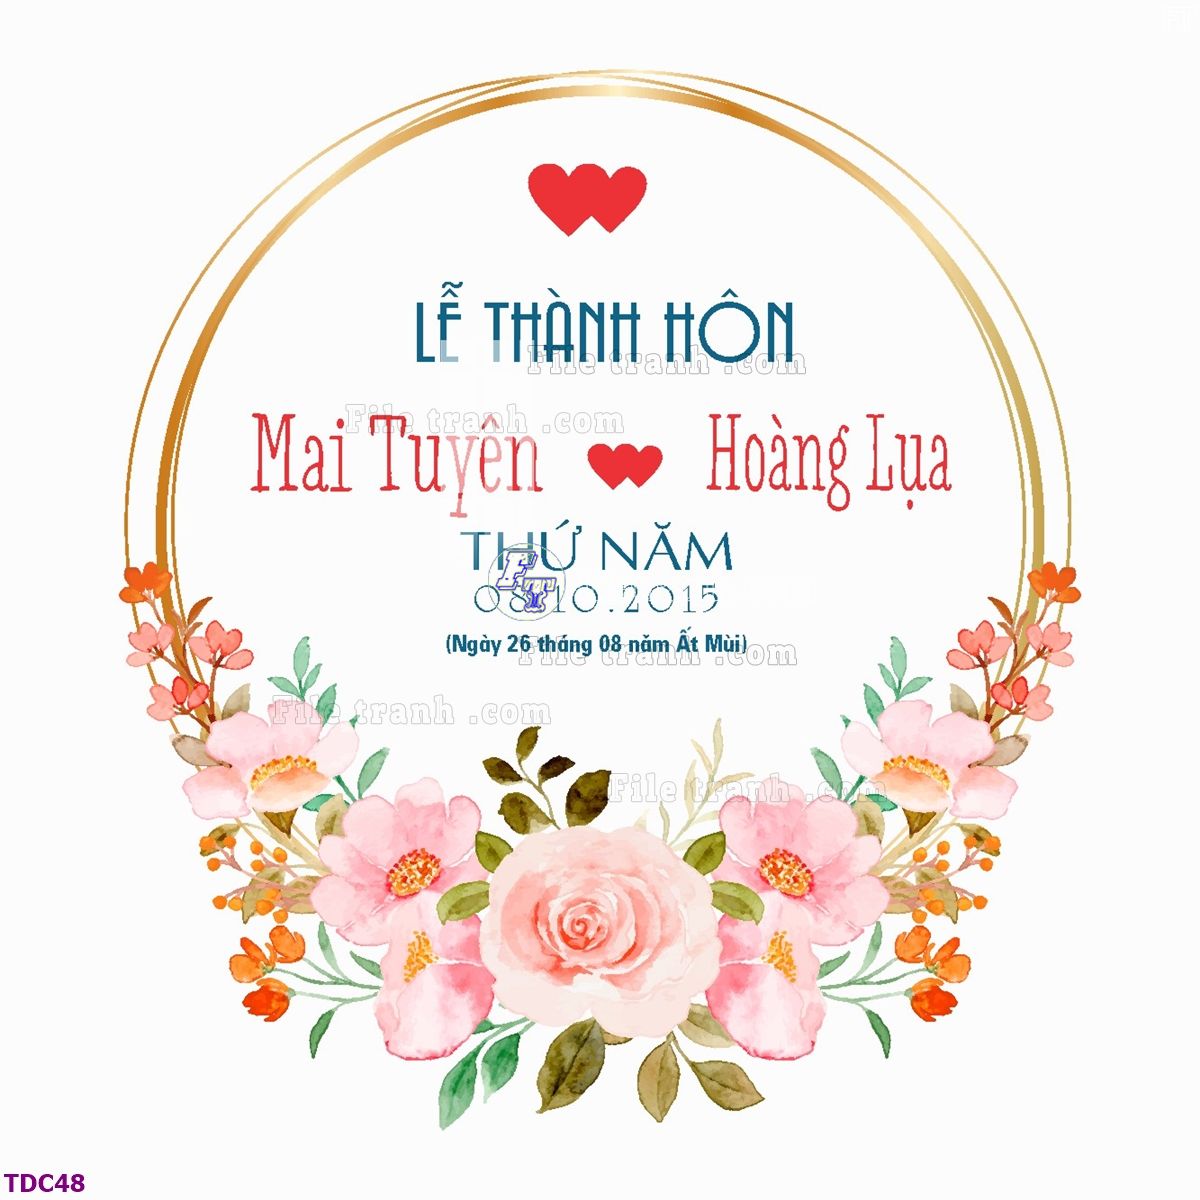 https://filetranh.com/dam-cuoi/file-banner-phong-tiec-dam-cuoi-tdc48.html